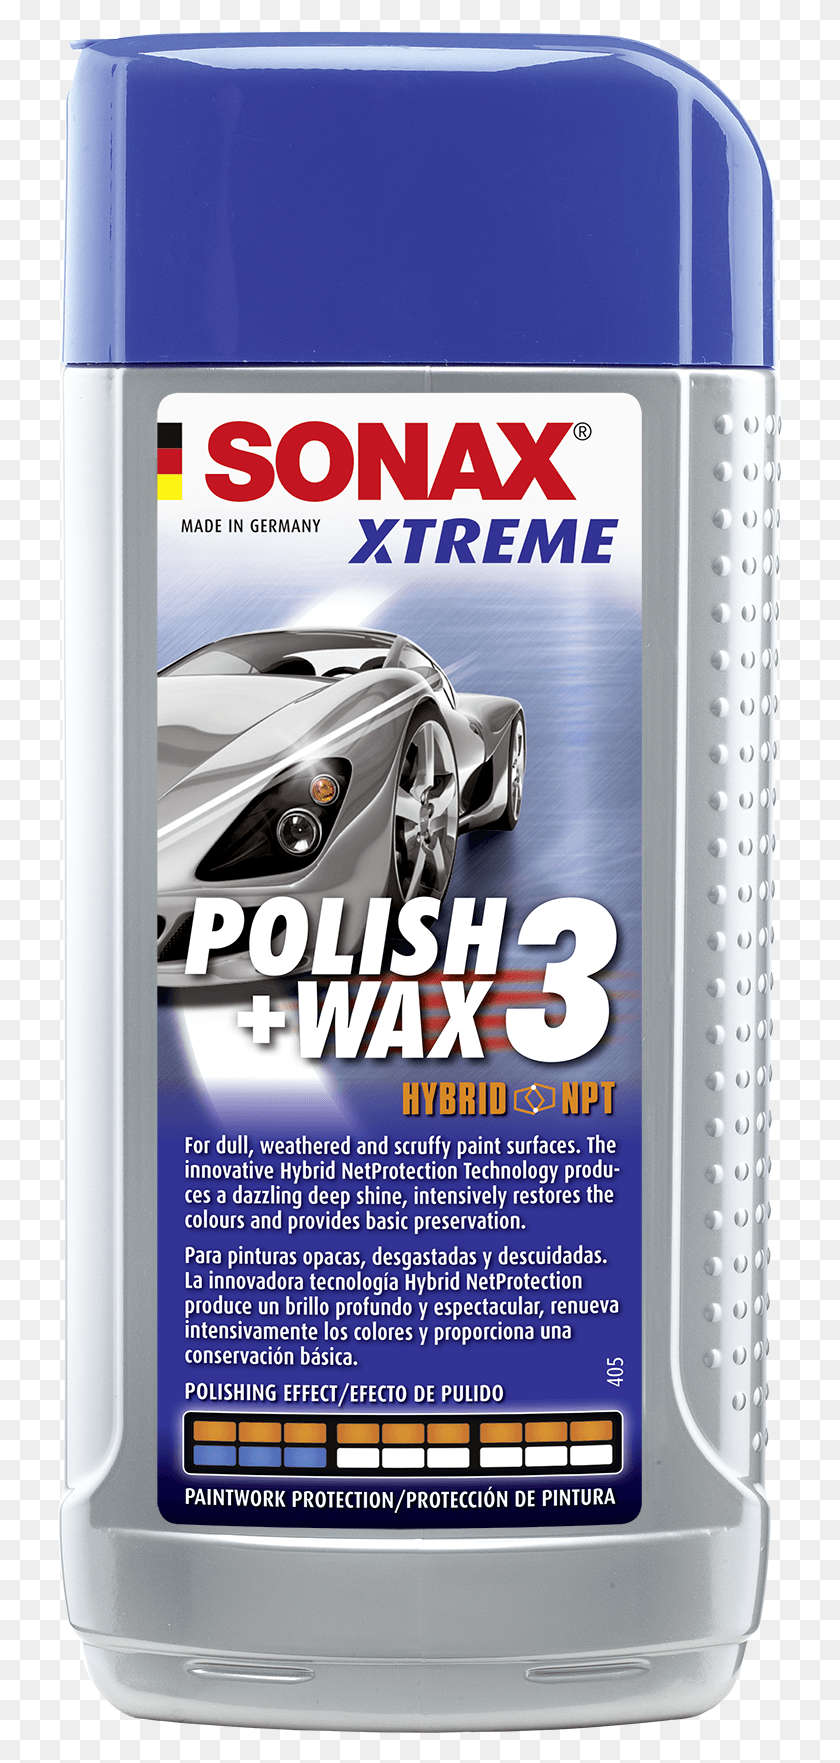 725x1703 Descargar Png Sonax Xtreme Polish Wax 3 Hybrid Npt Sonax Xtreme Polish Wax 2 Hybrid Npt, Teléfono Móvil, Electrónica Hd Png